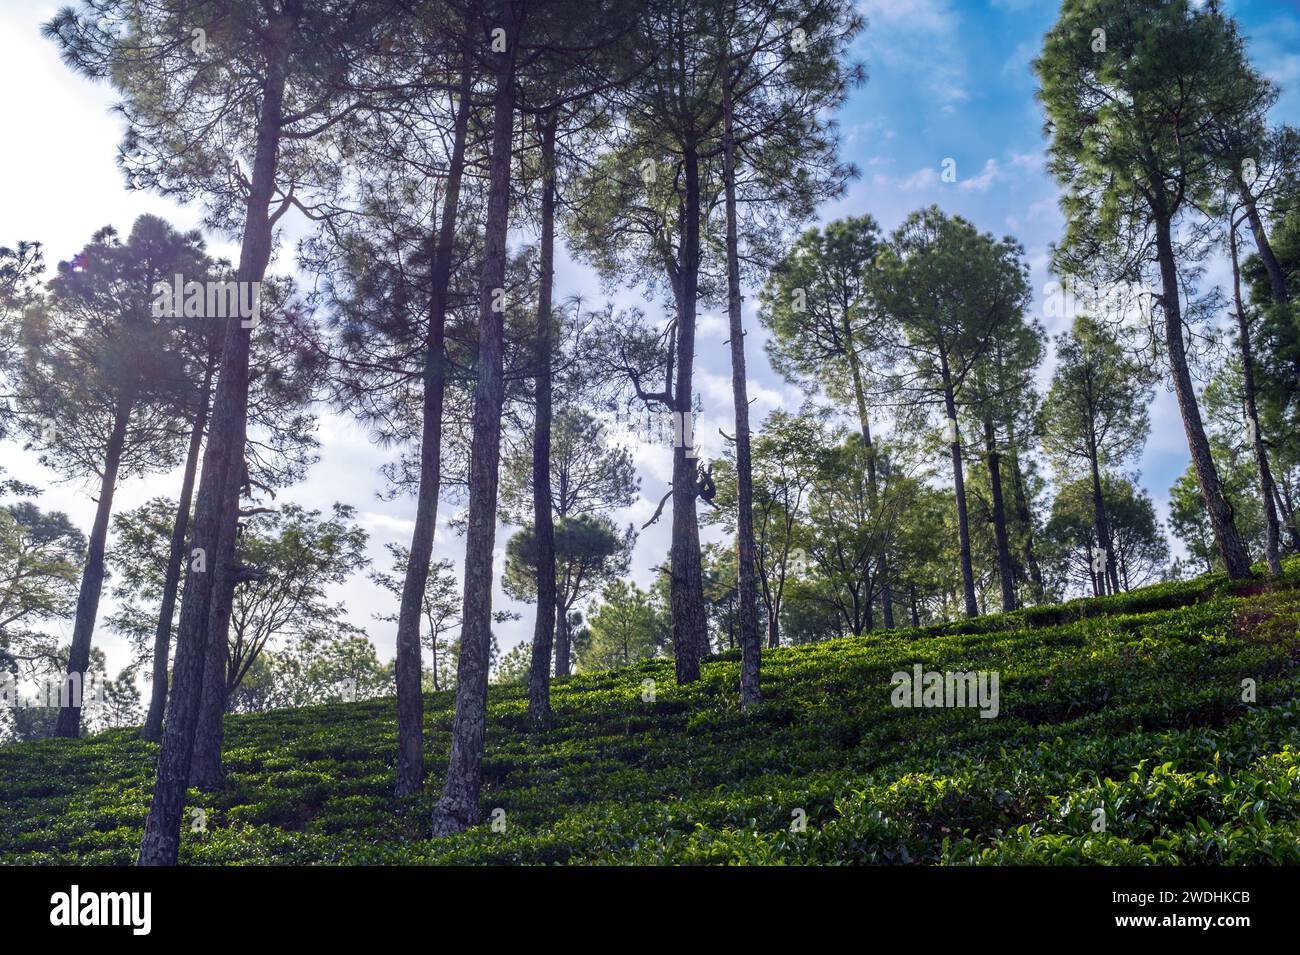 Trees in the forest.  Serine green tea garden landscape in Himalayan region  Kausani, Uttarakhand' India. Stock Photo